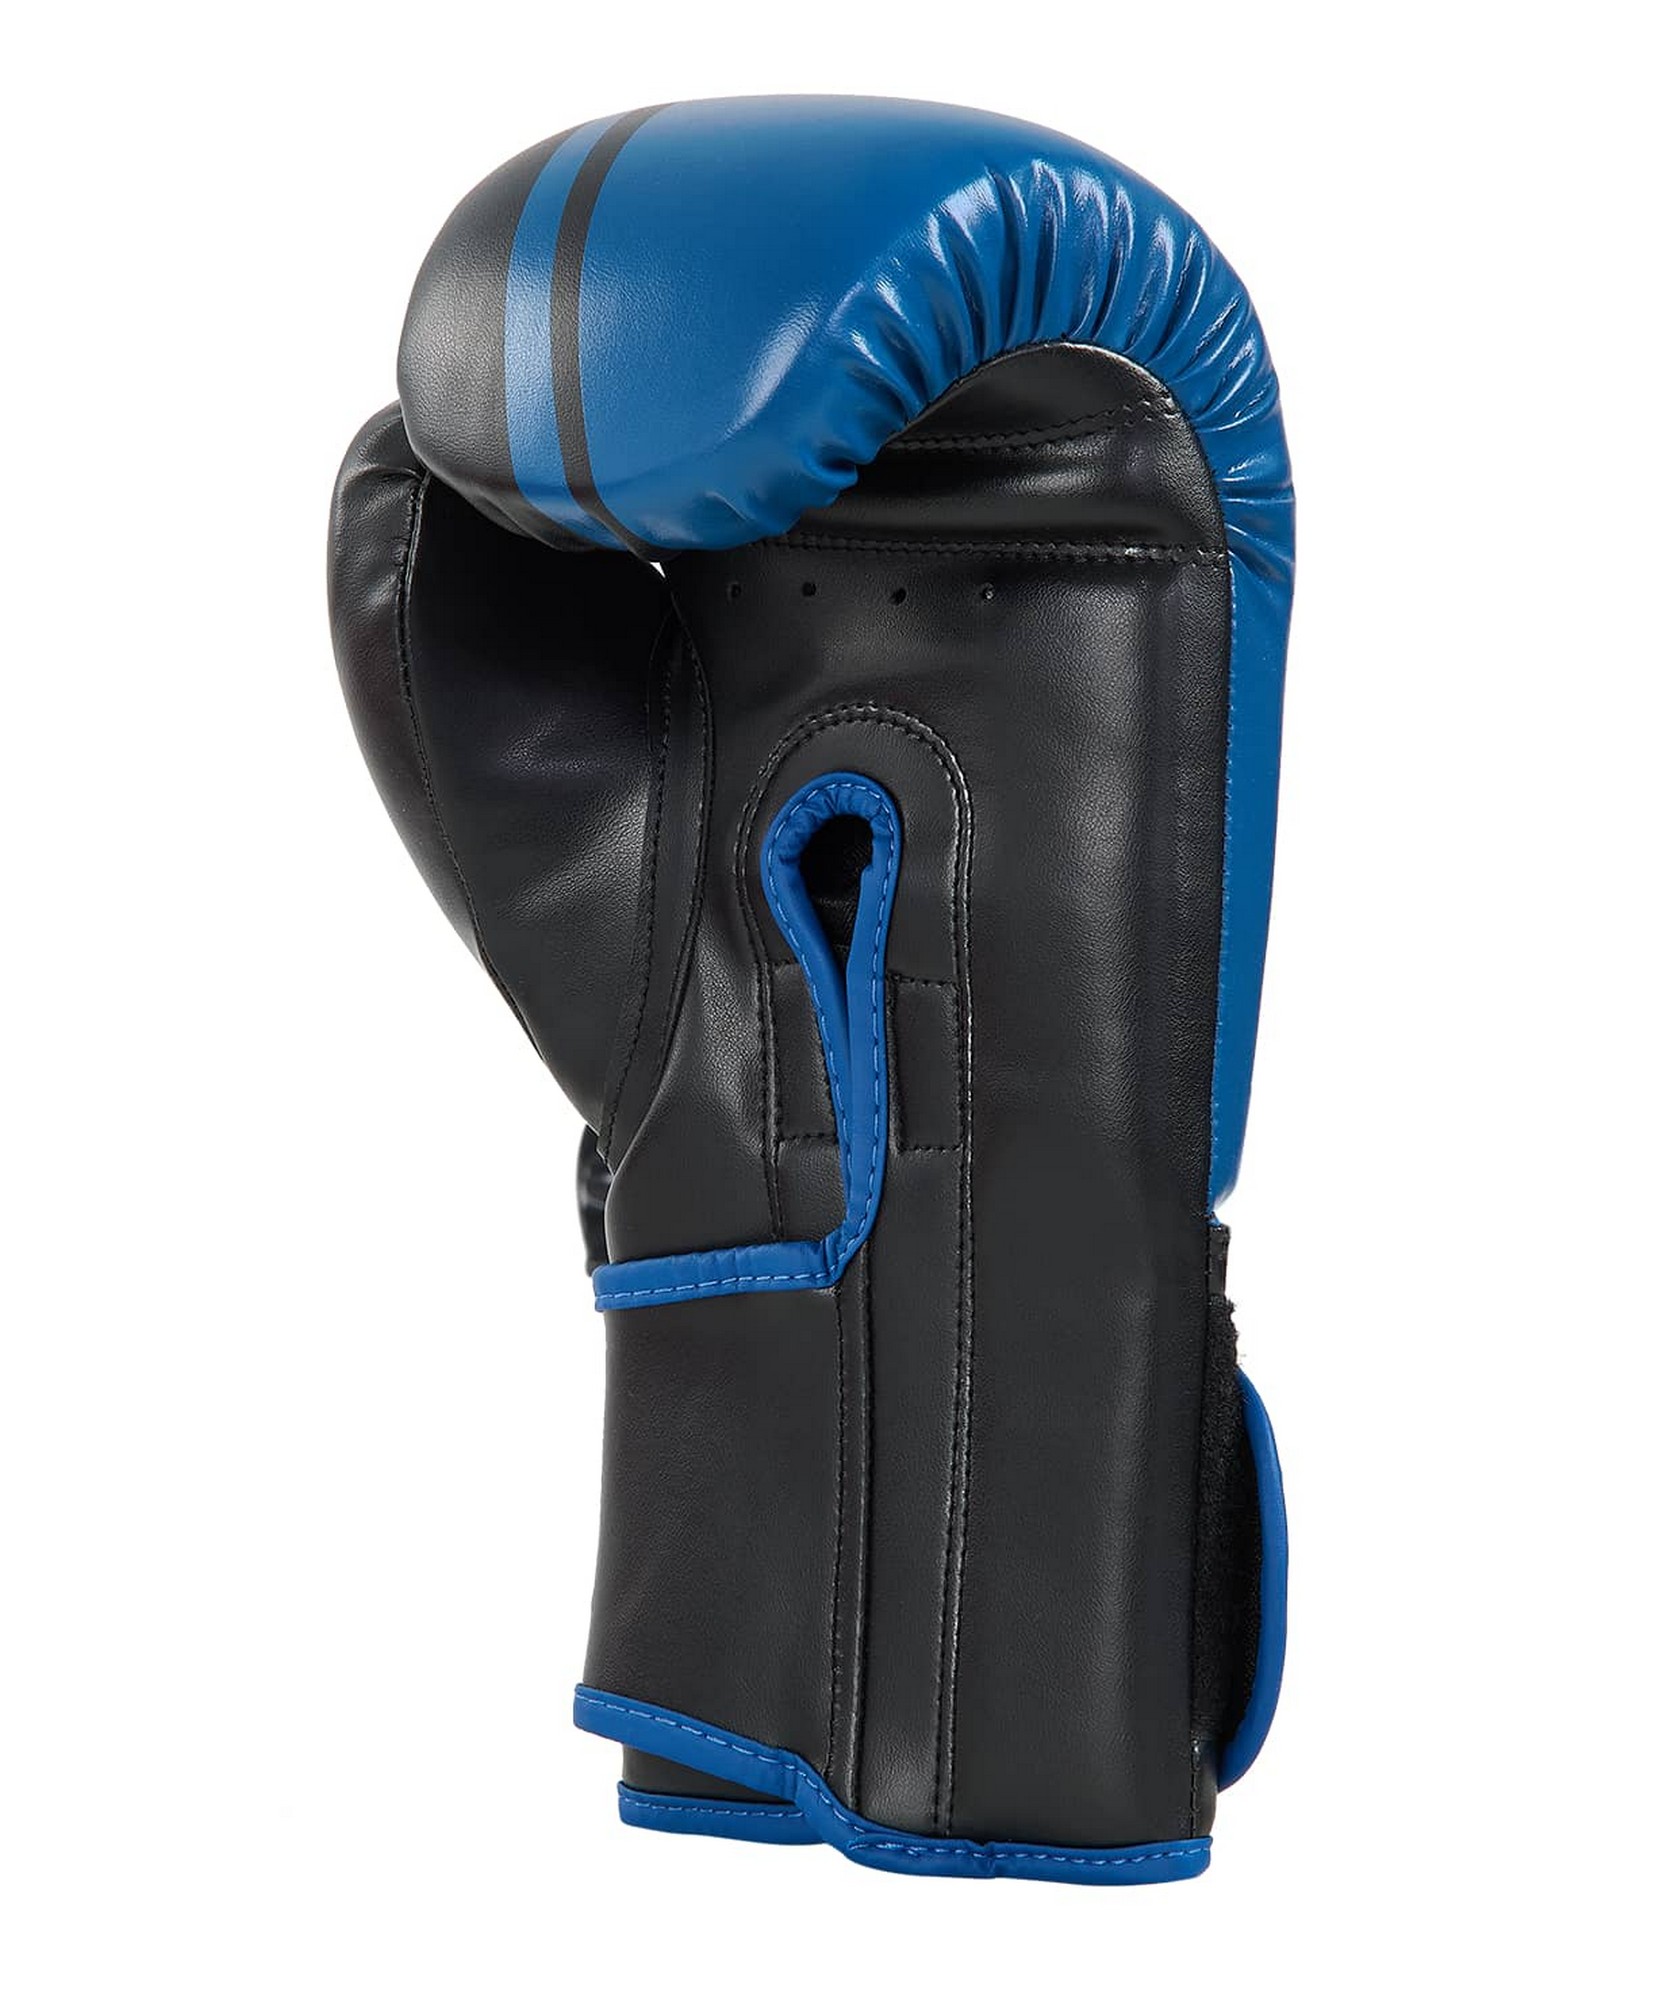 Перчатки боксерские Insane Montu ПУ, 8 oz, синий 1663_2000